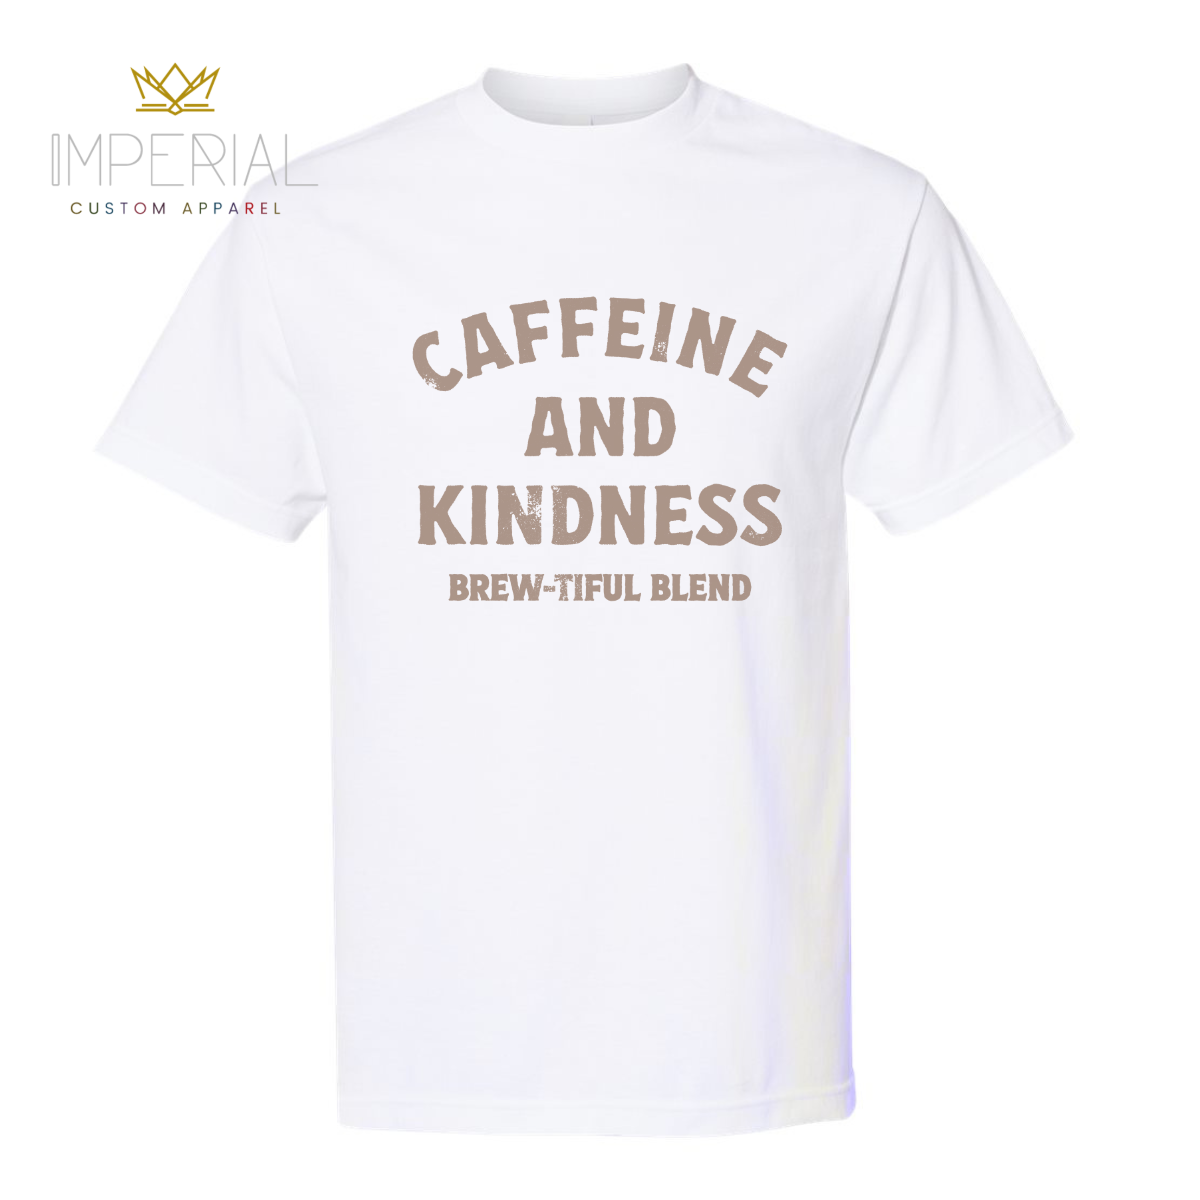 Caffeine and Kindness Brew-tiful Blend